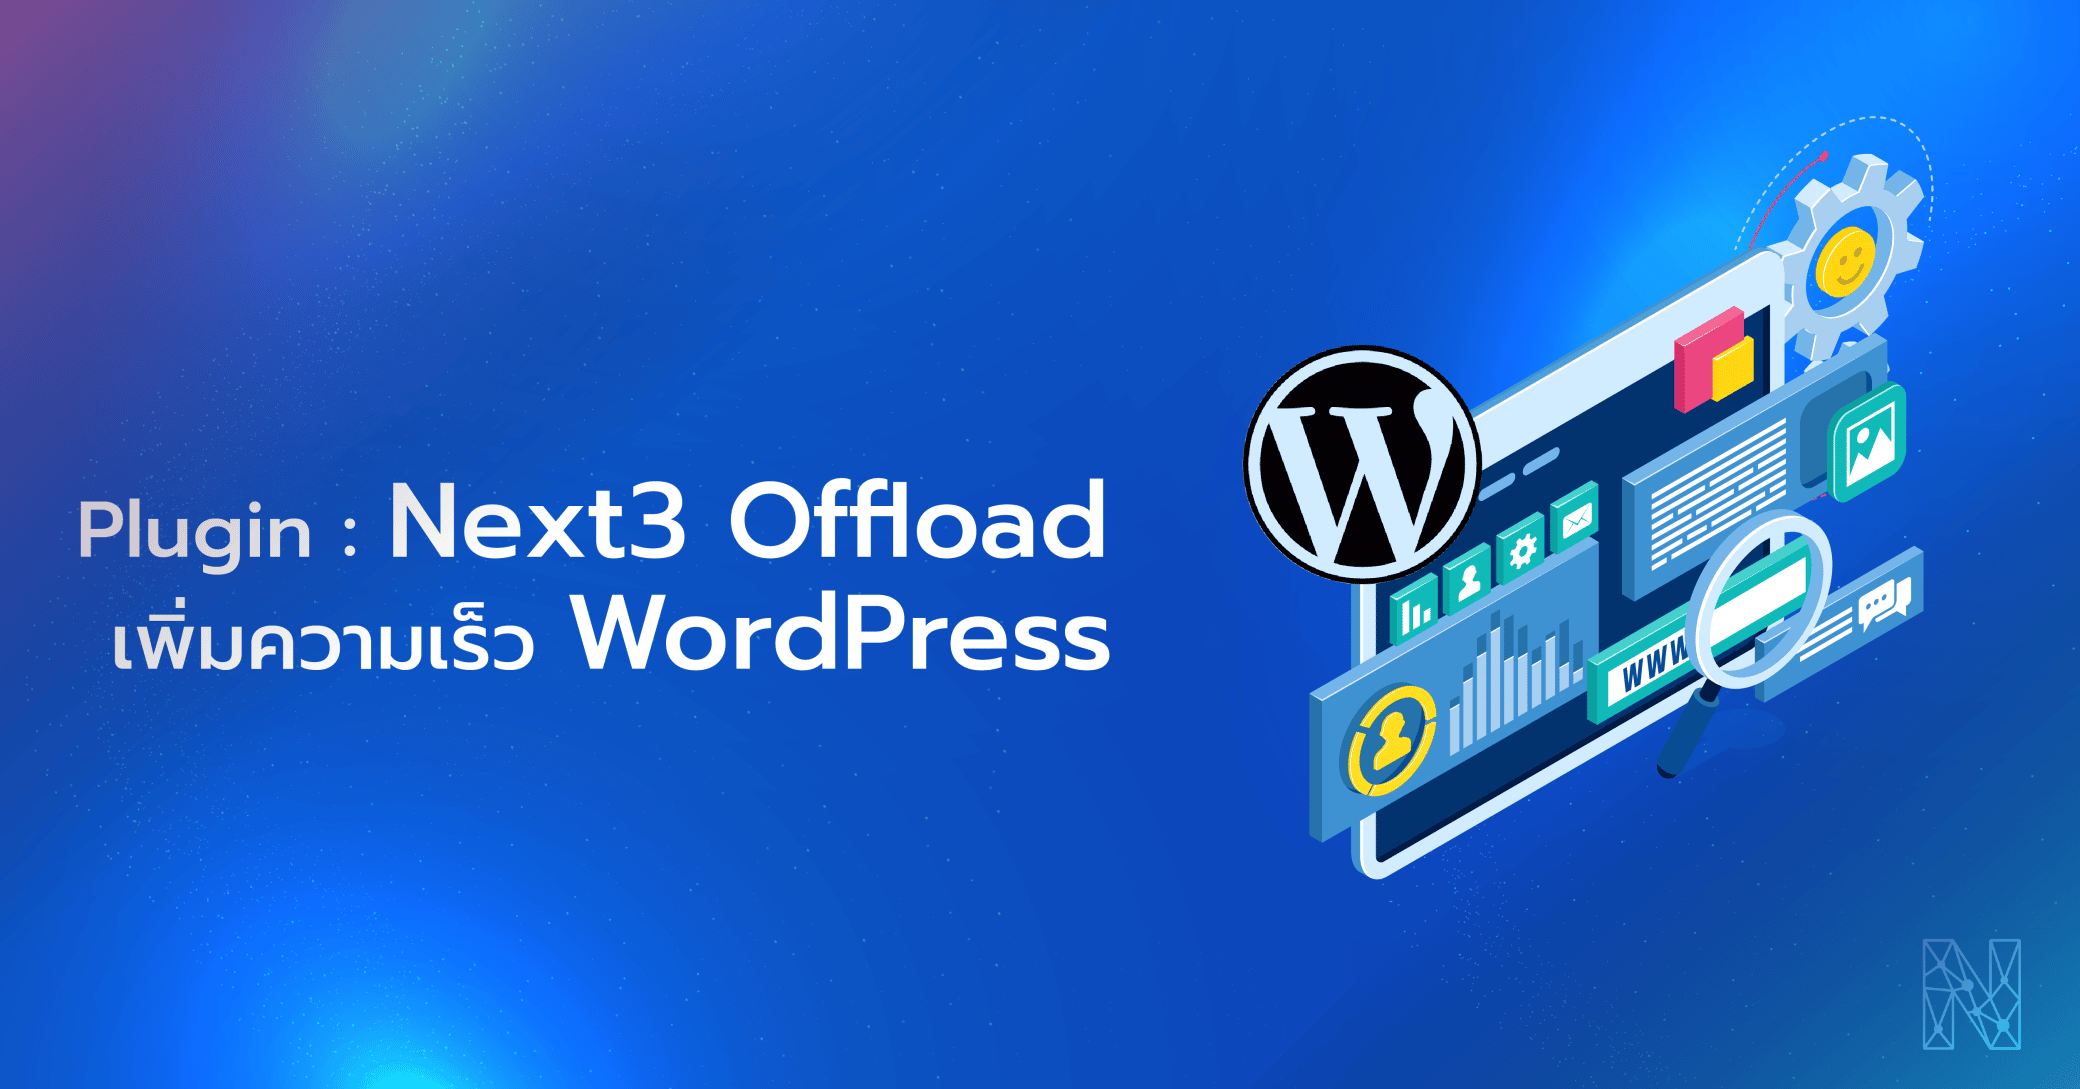 Next3 Offload : ปลั๊กอินเพิ่มความเร็วเว็บไซต์ WordPress